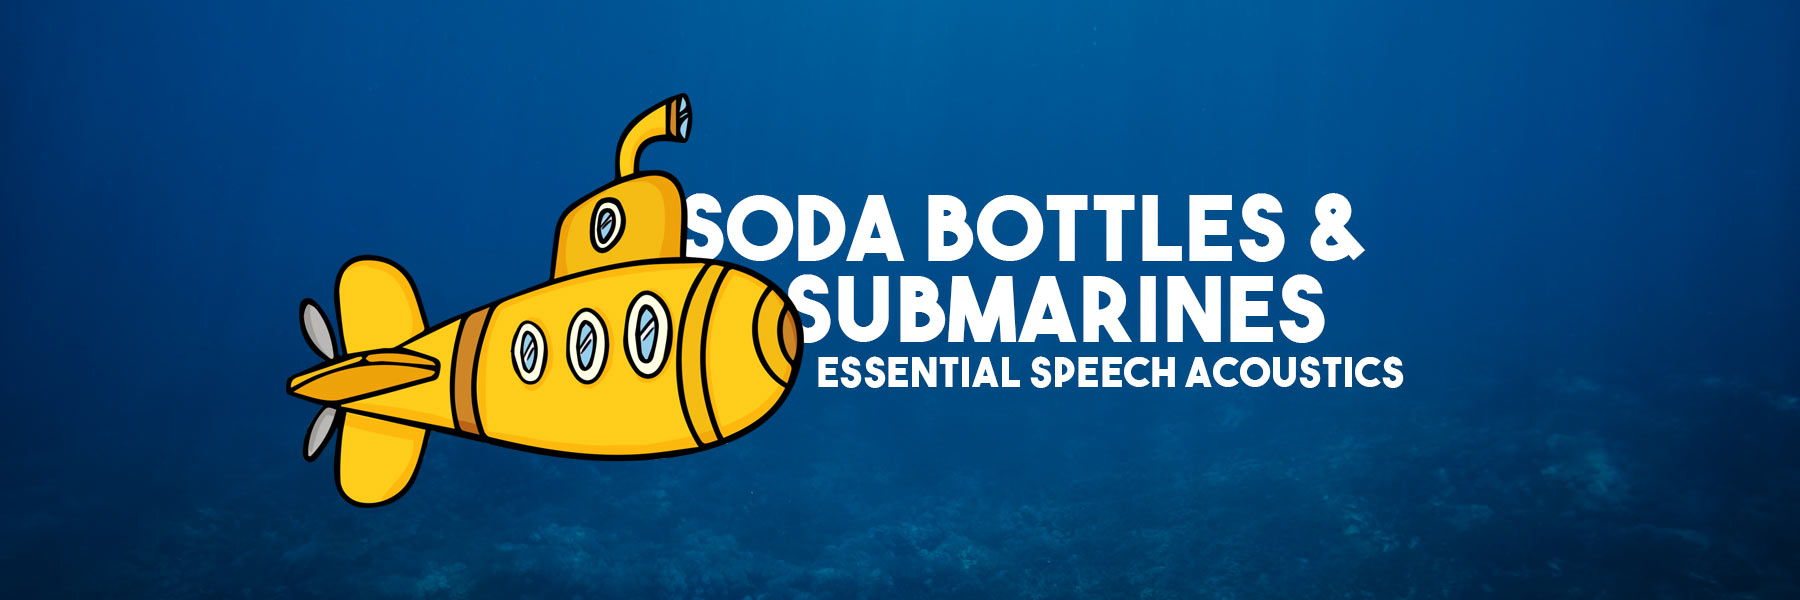 Soda Bottles & Submarines: Essential Speech Acoustics